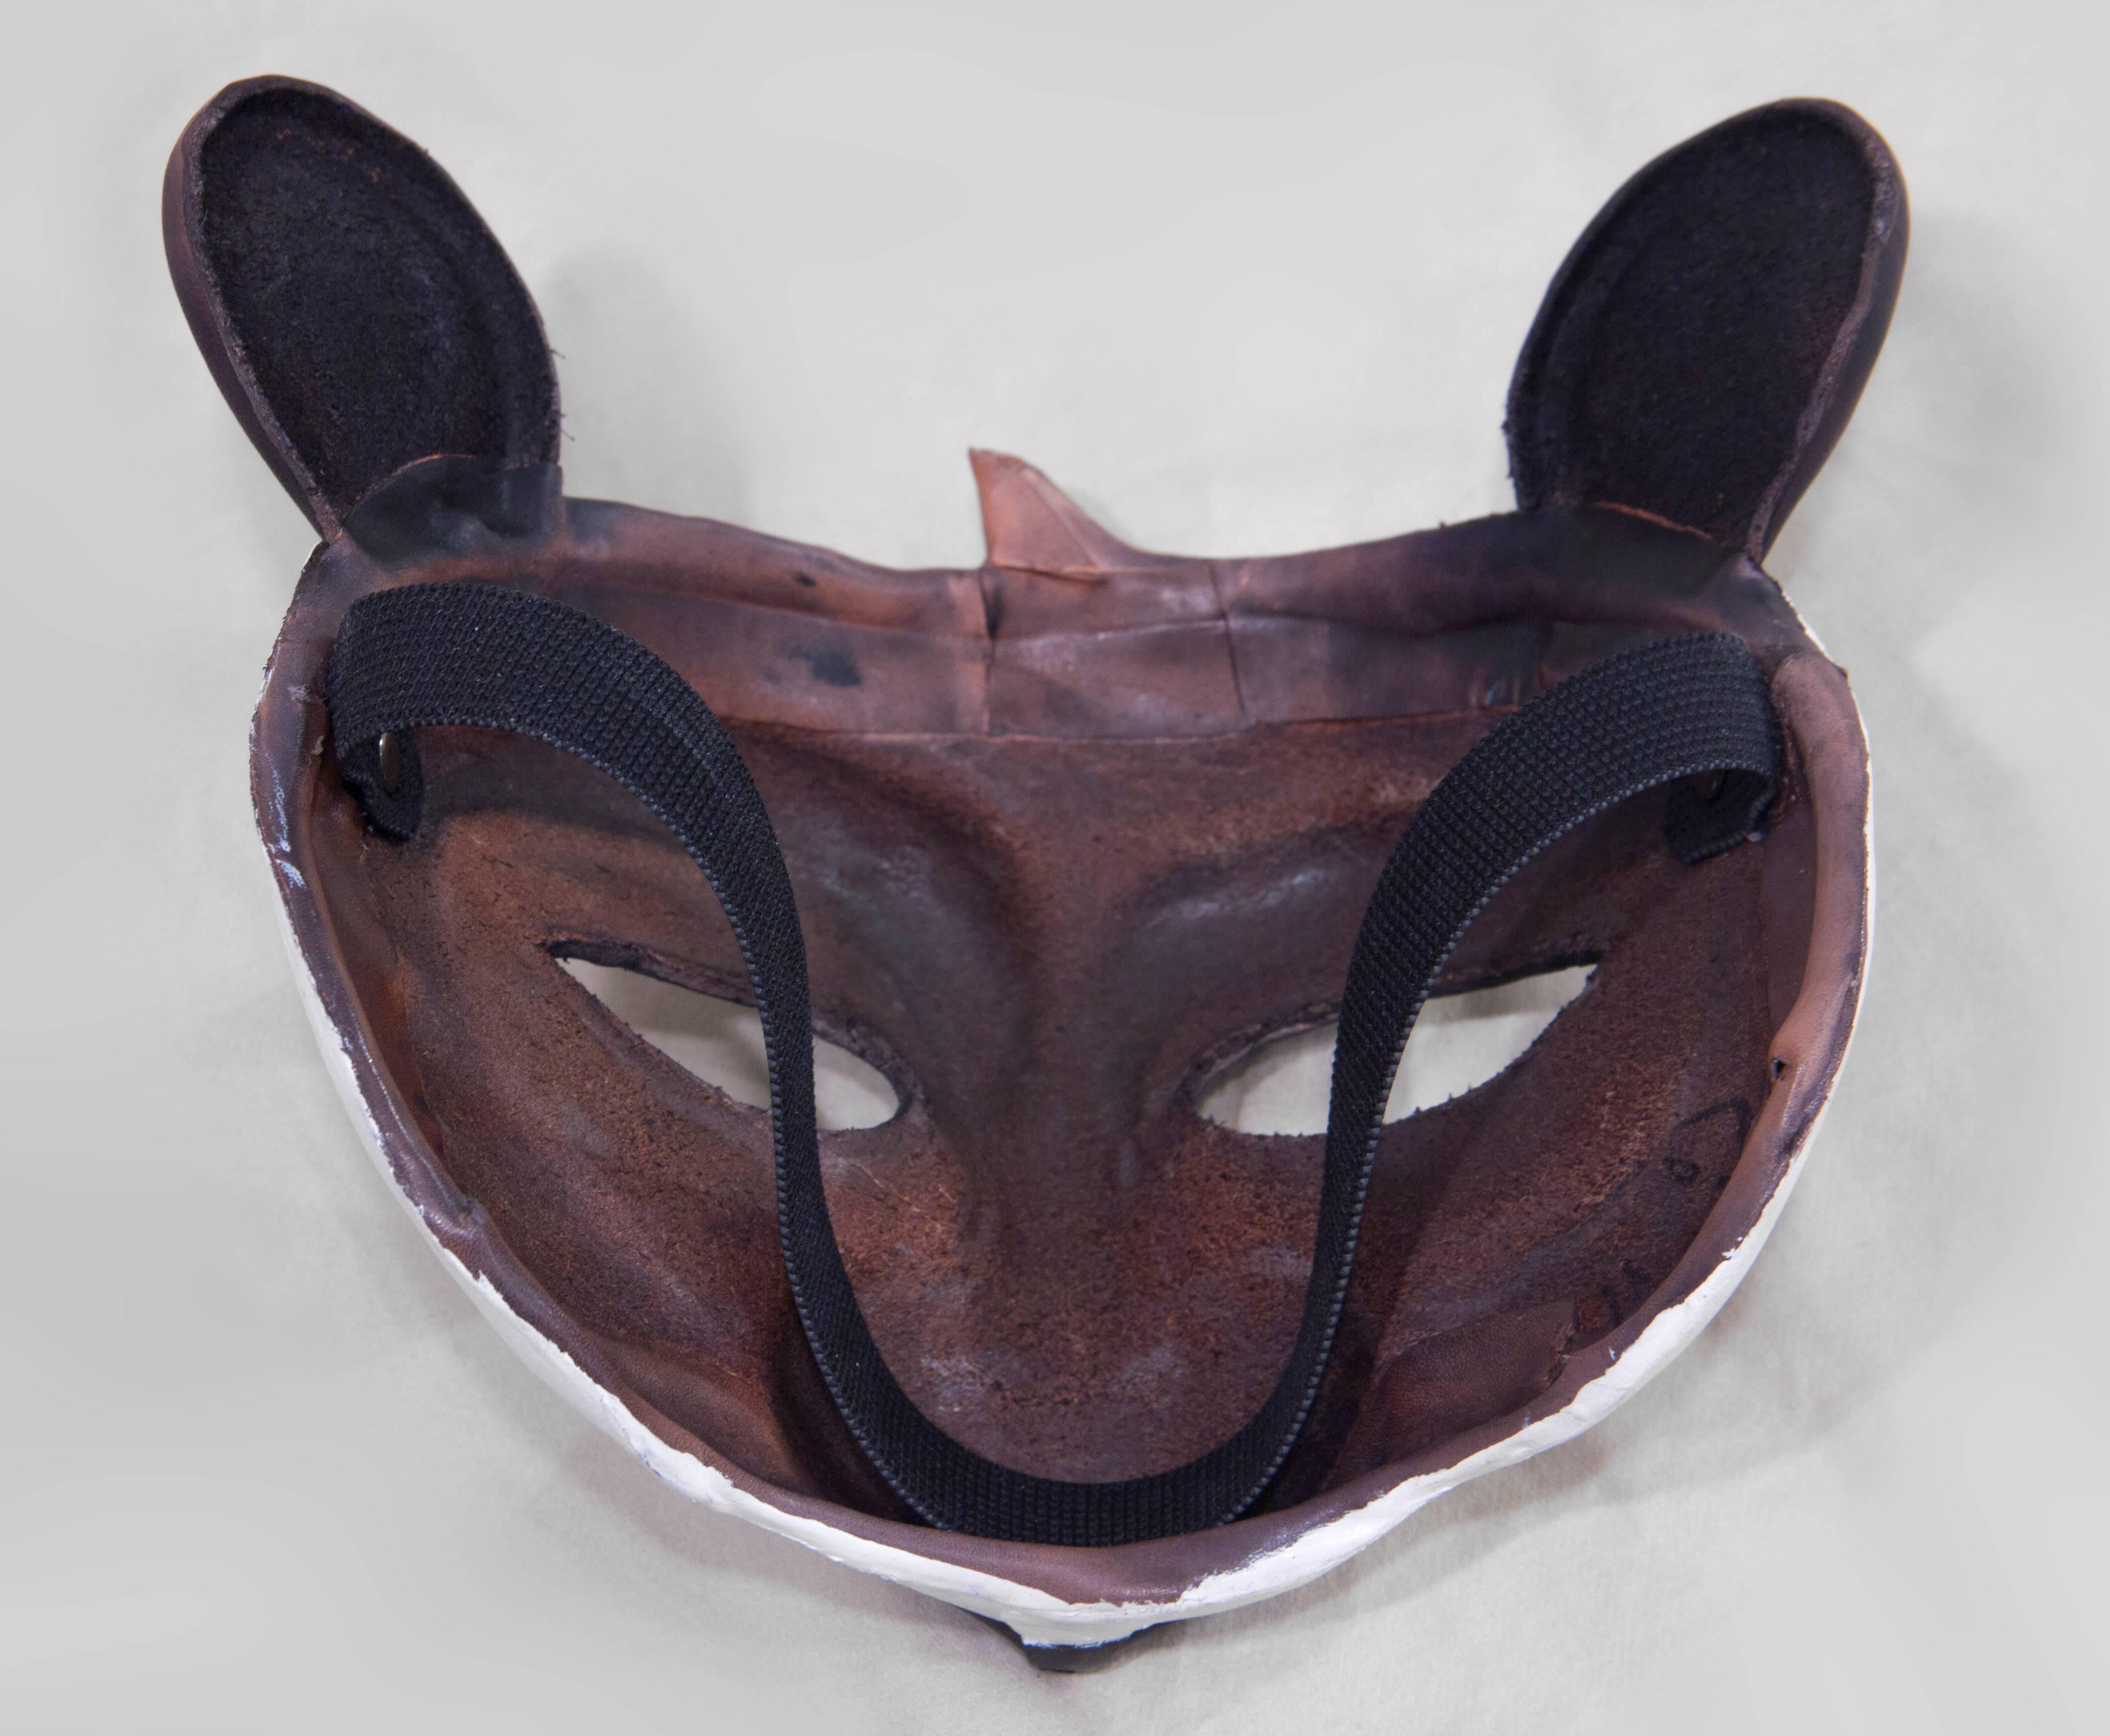 Leather Panda Mask (Handgefertigt)